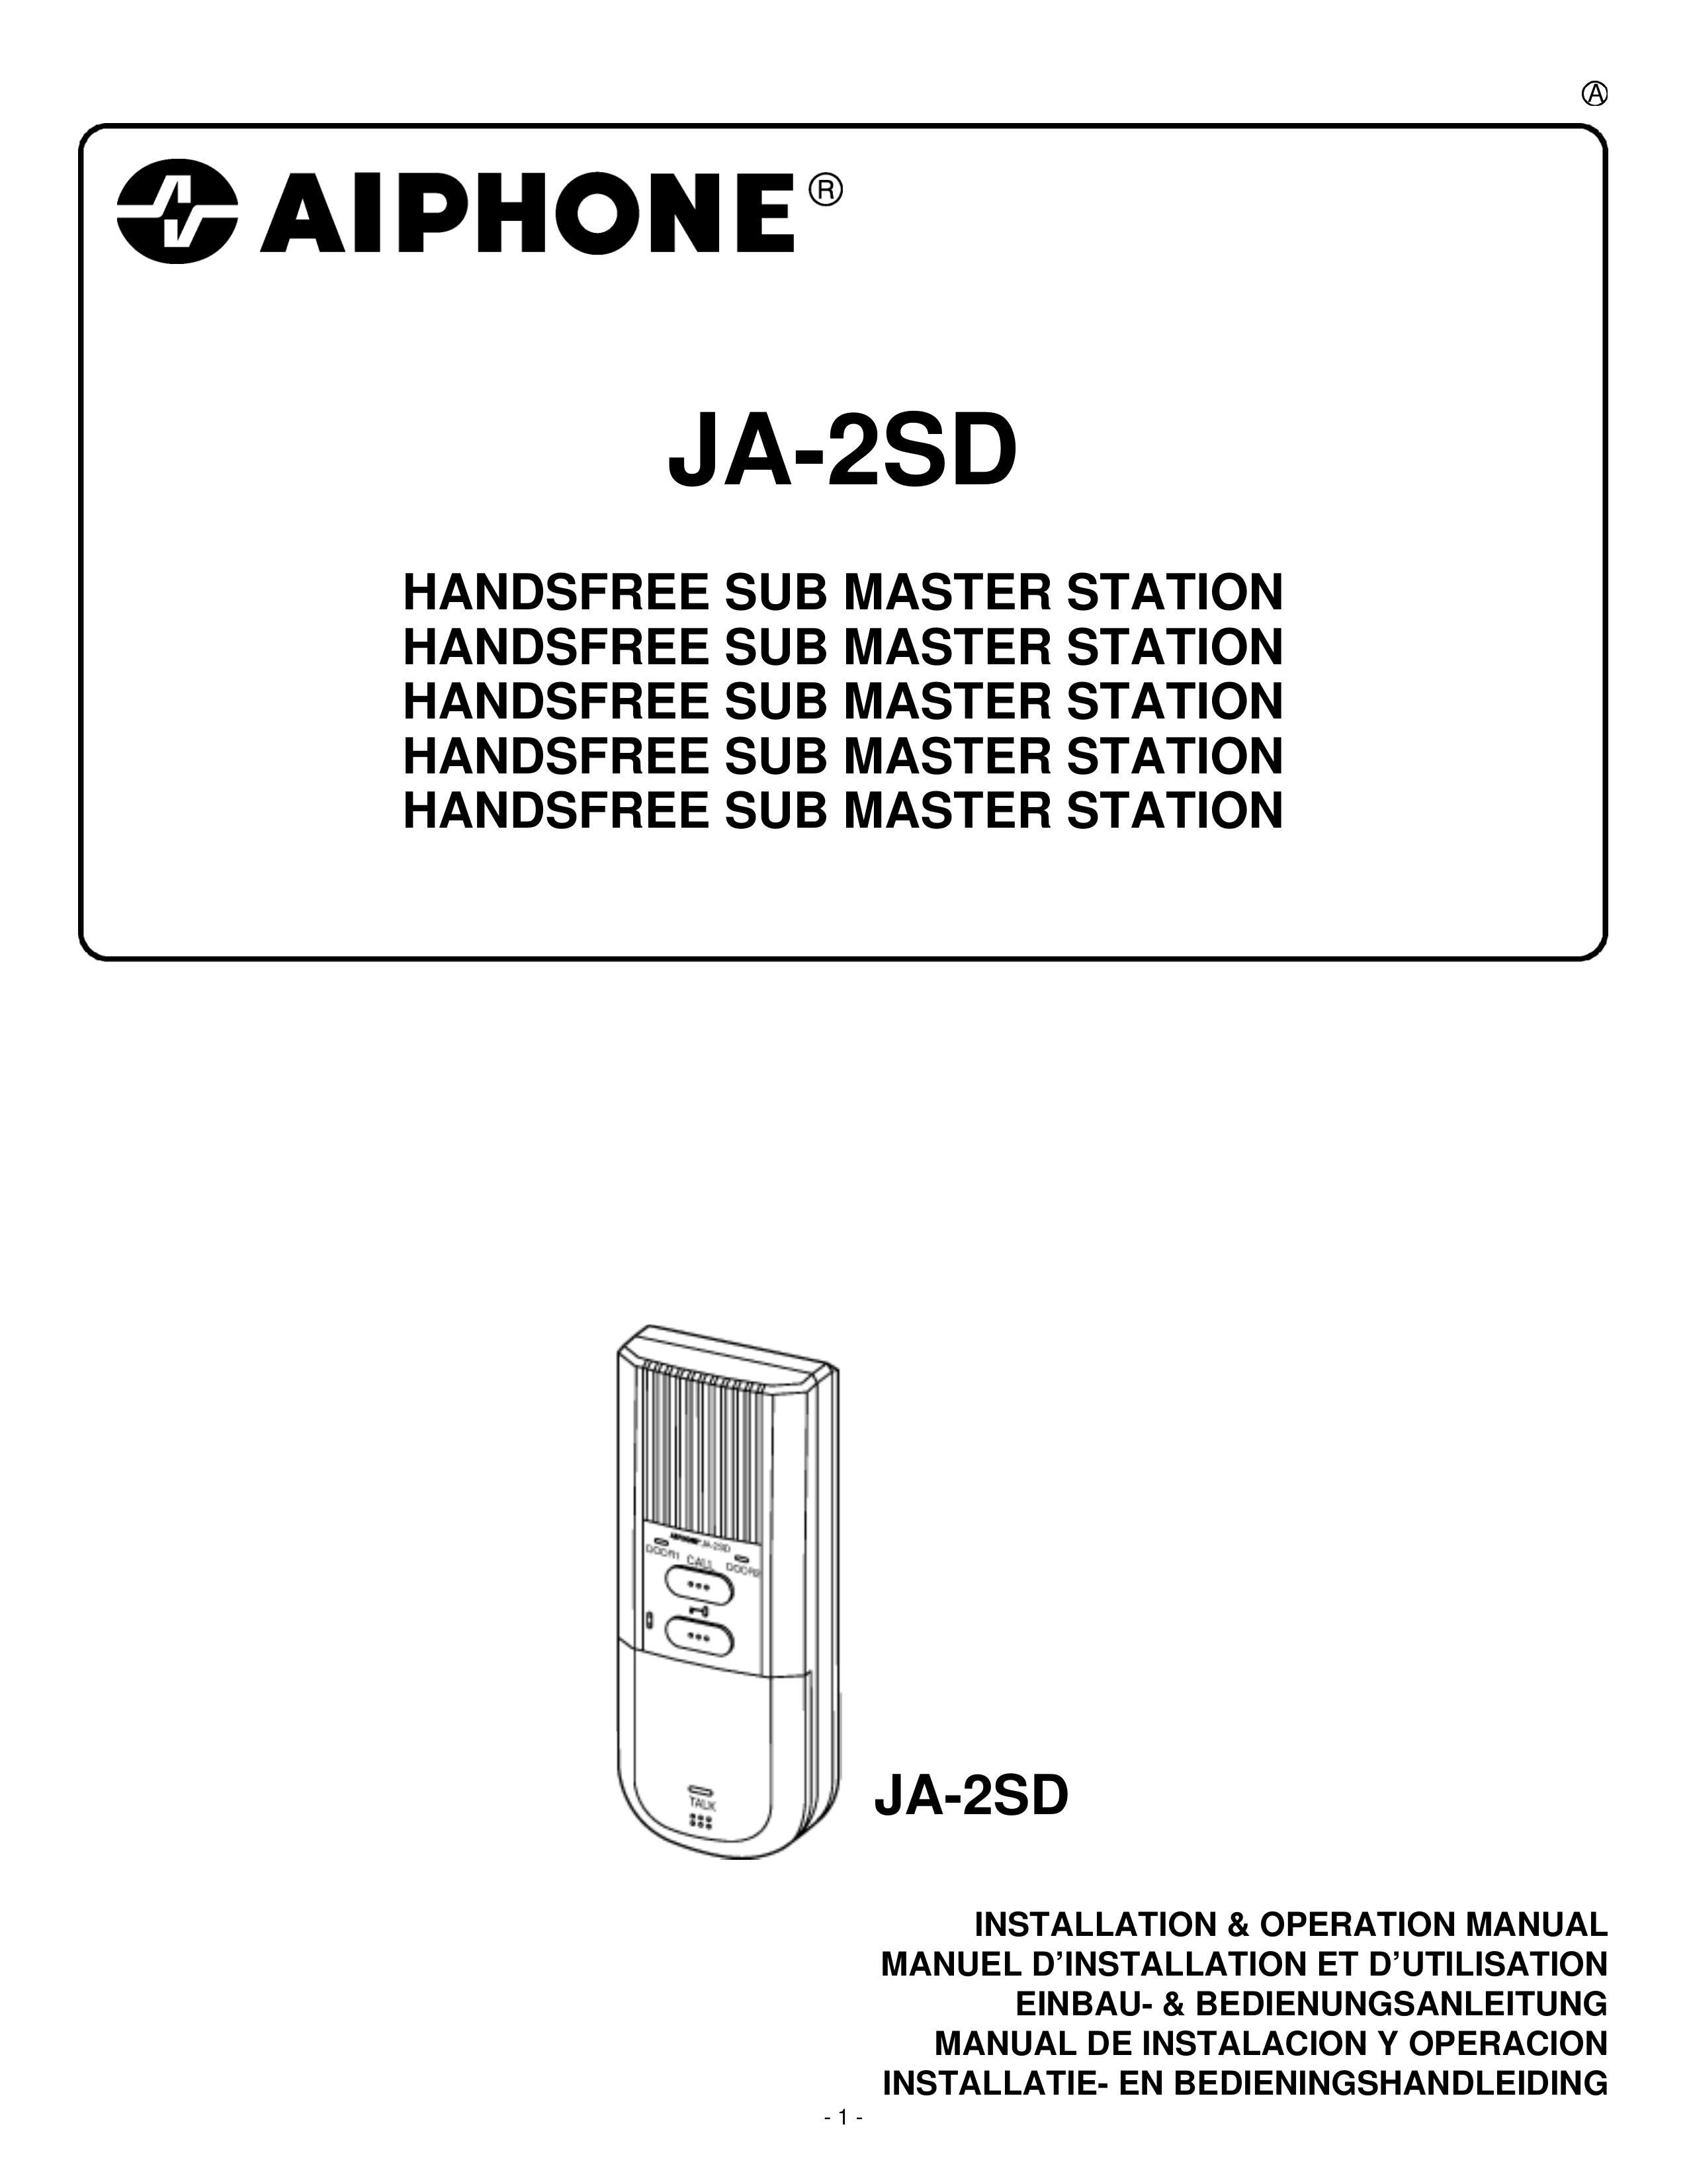 Aiphone ja-2sd Drums User Manual